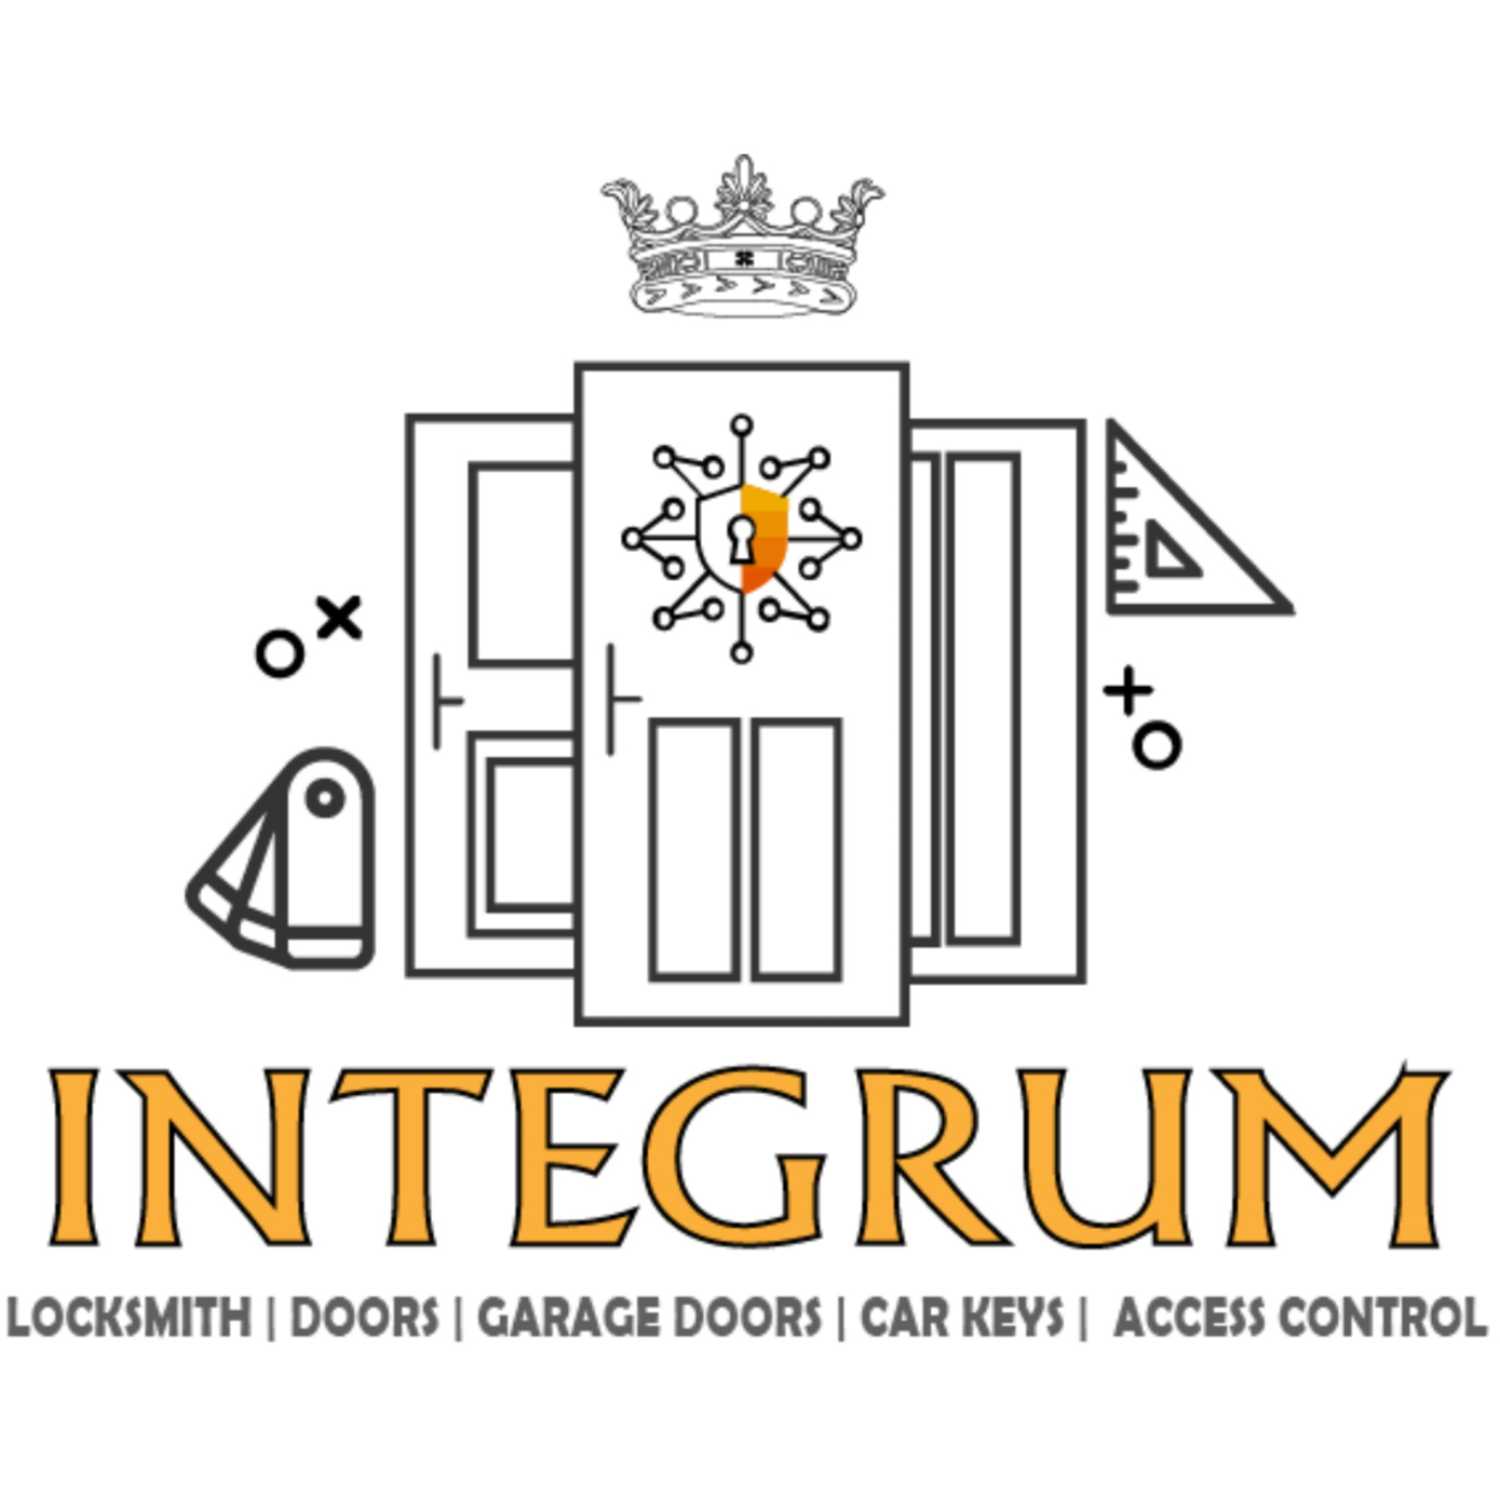 The Integrum Locksmith Doors Podcast